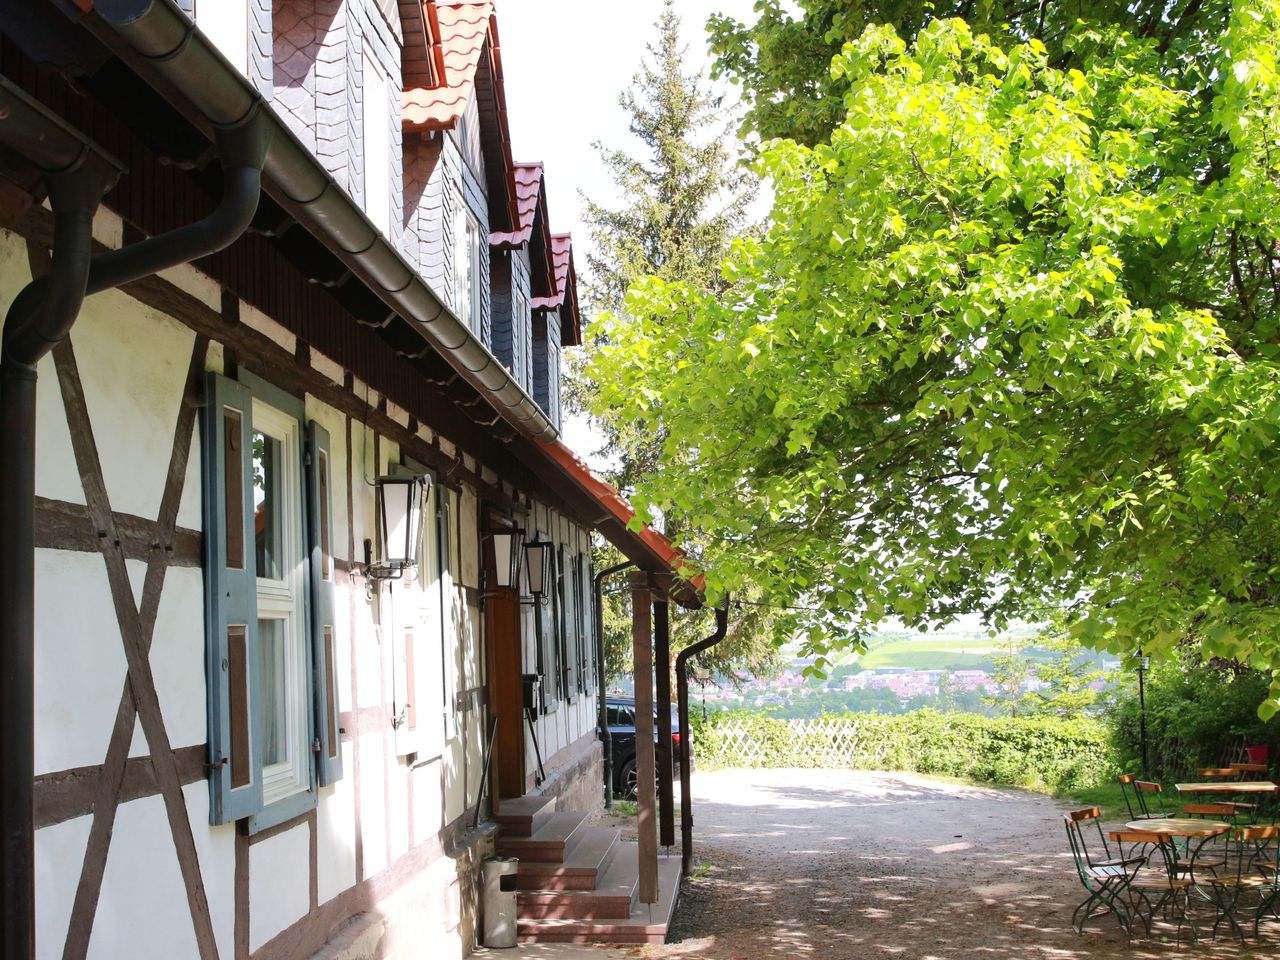 4 Nächte E Bike im Tiny House in Mitteldeutschland